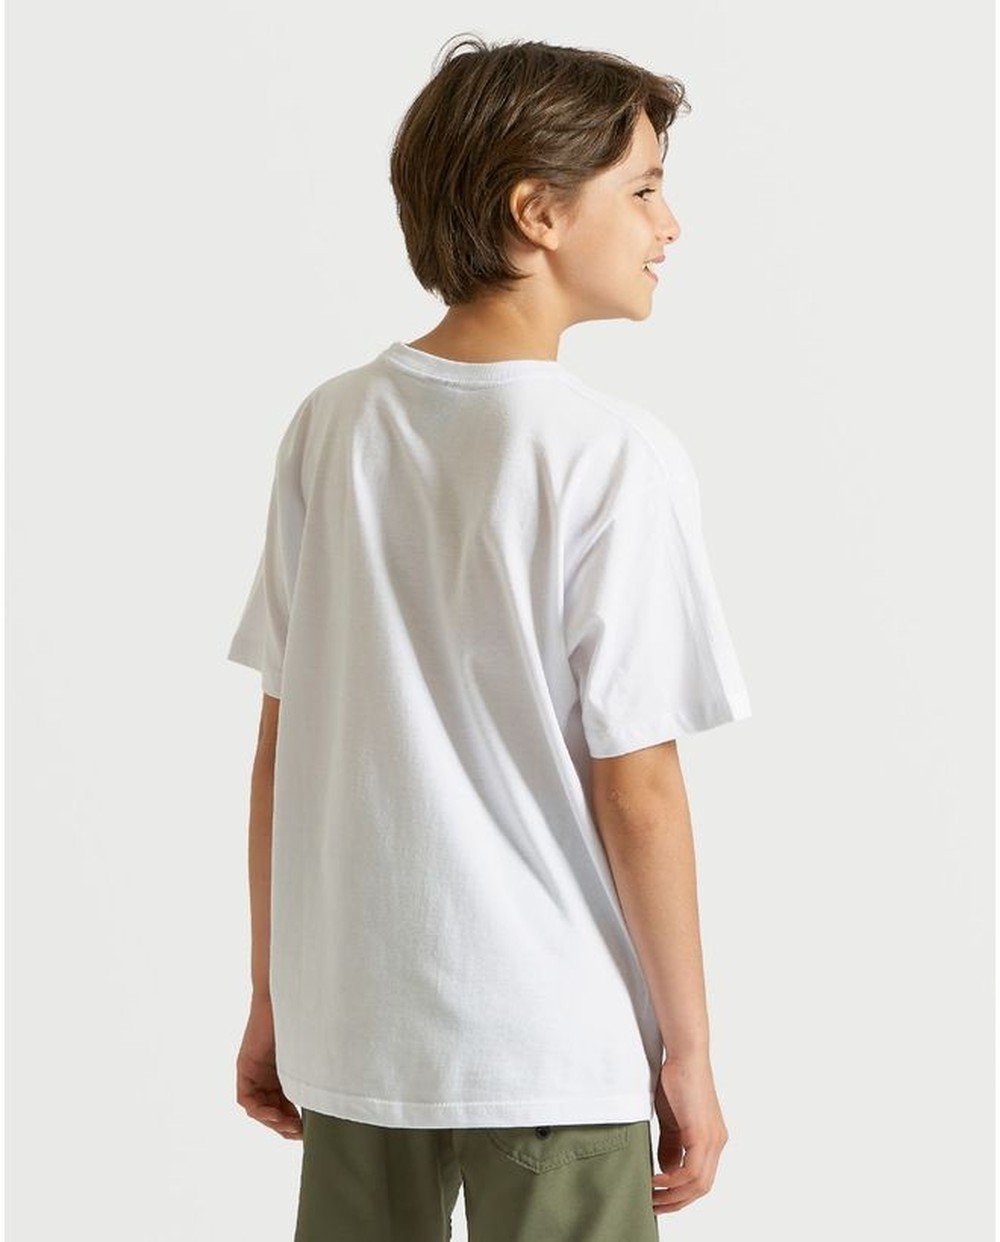 Camiseta Volcom Iconic Stone Juvenil Branca